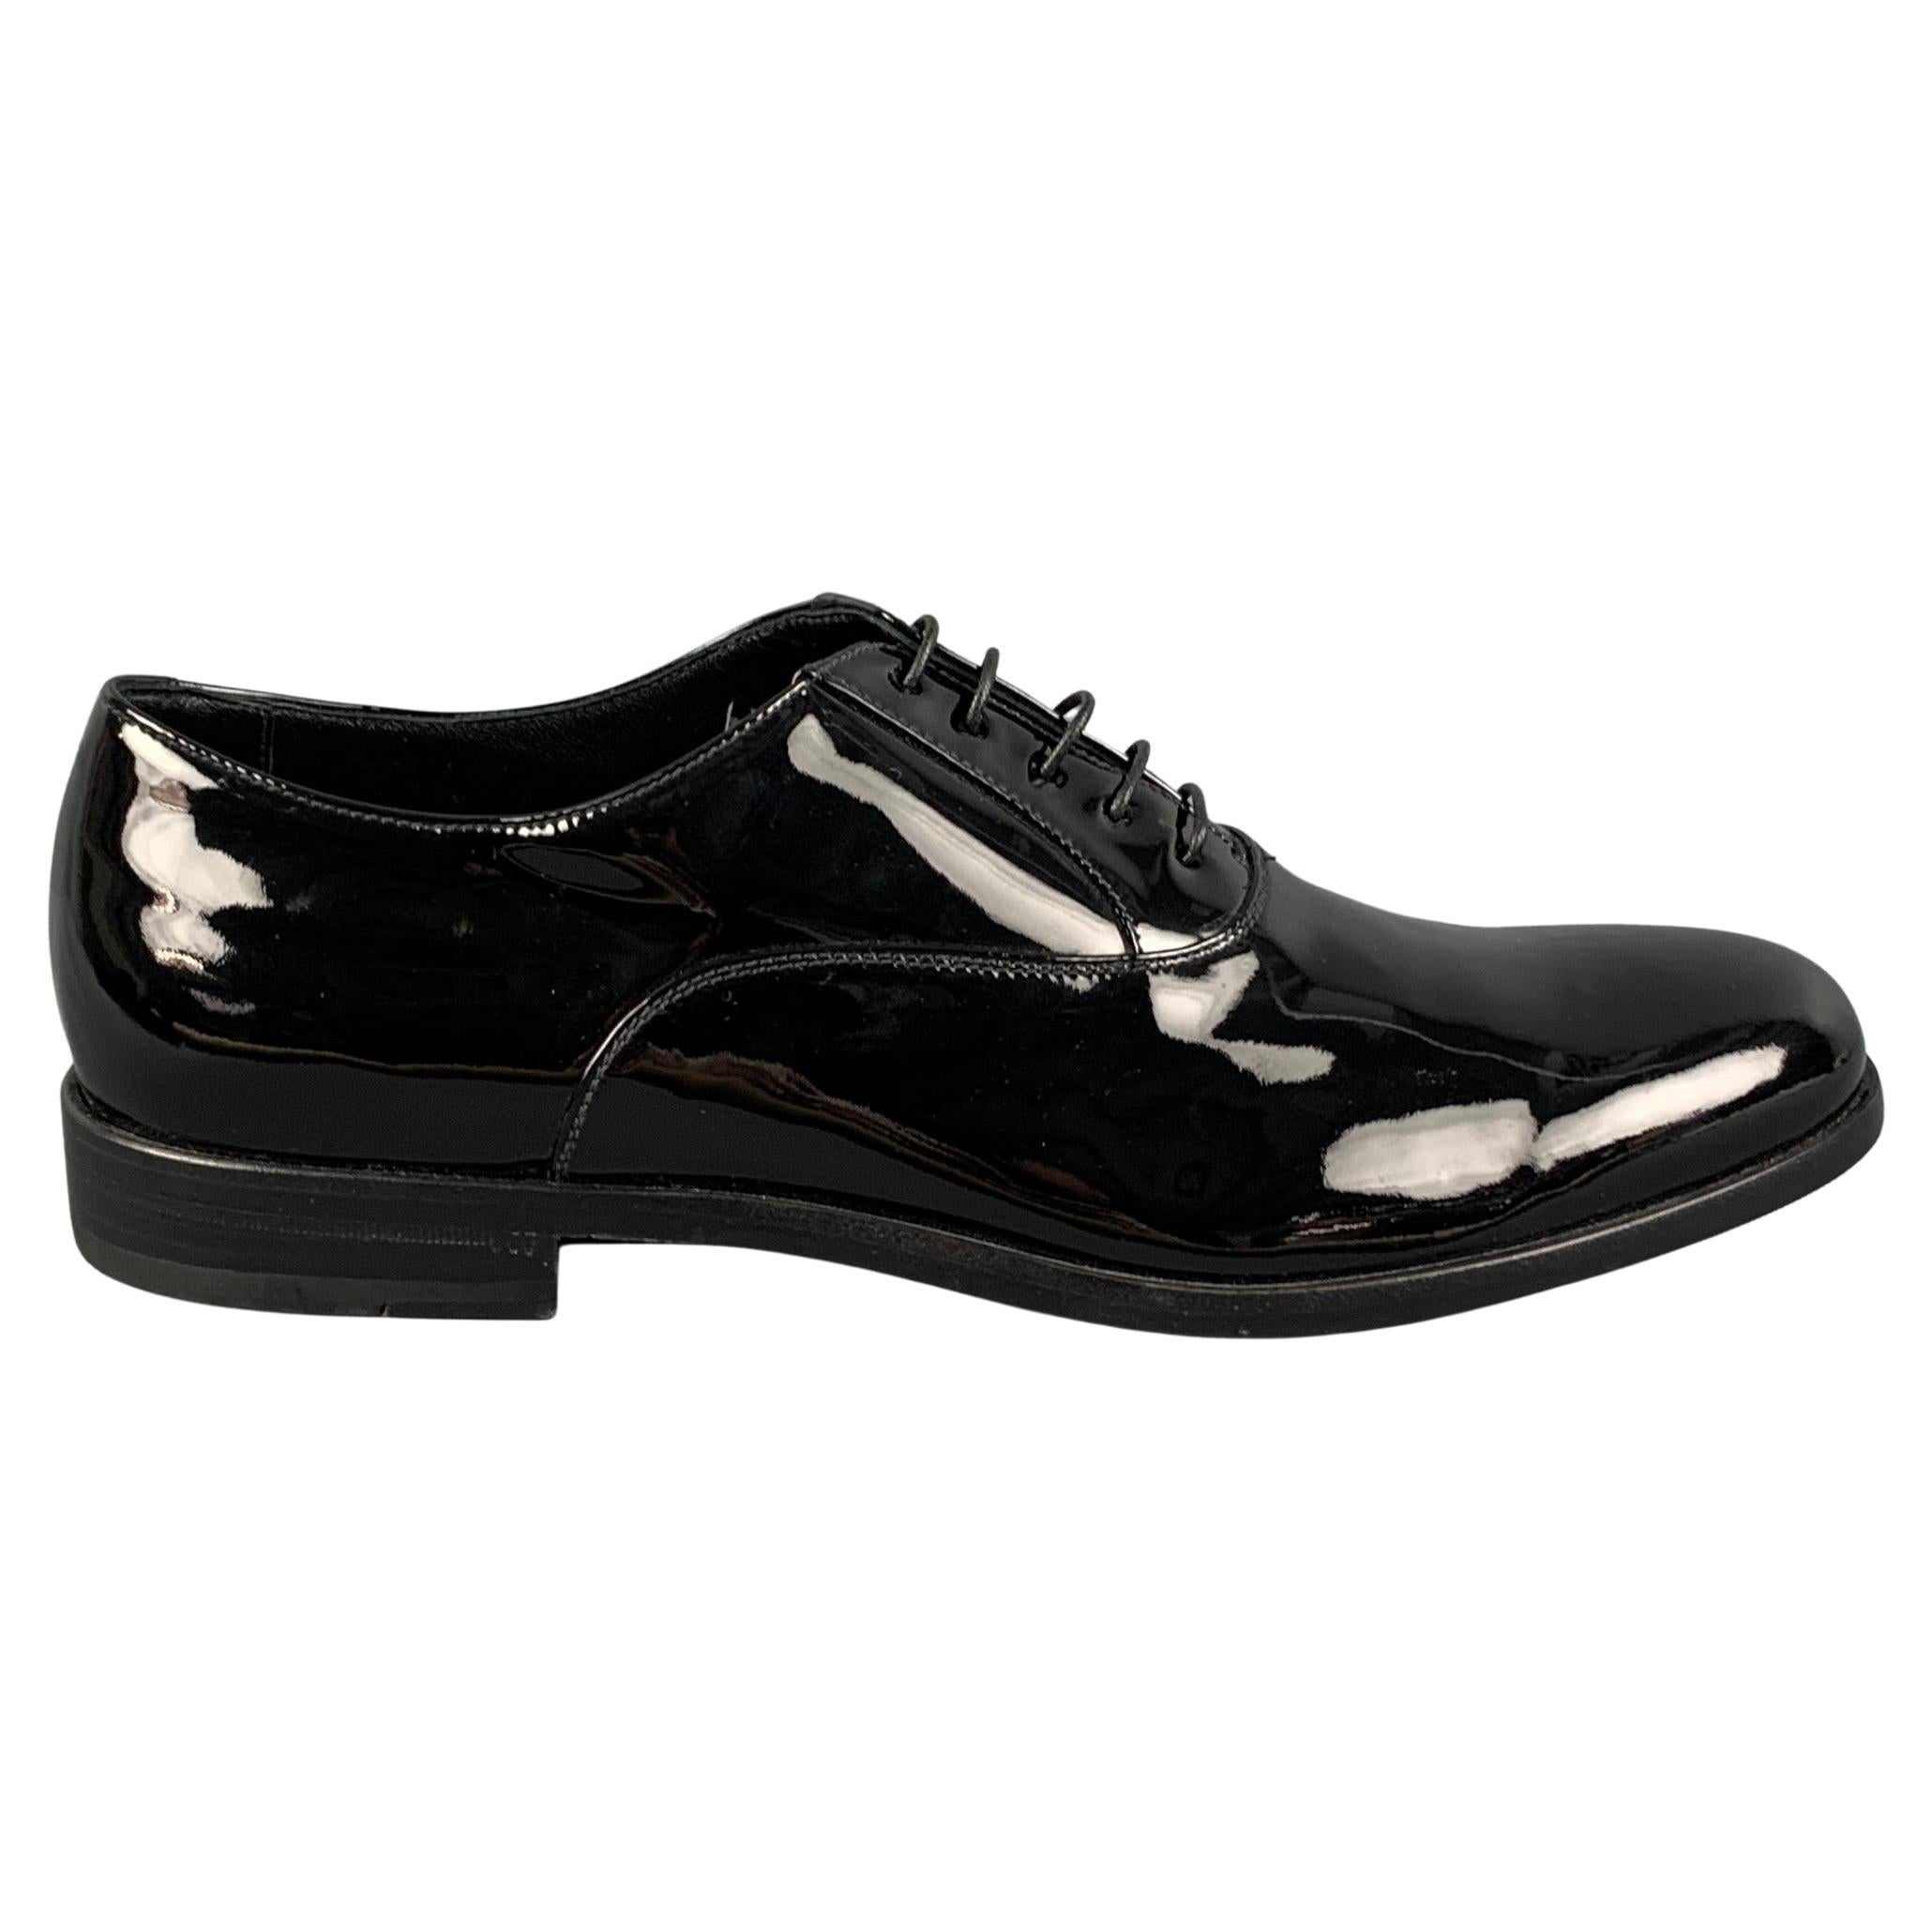 BRIONI Size 9 Black Patent Leather Lace Up Shoes